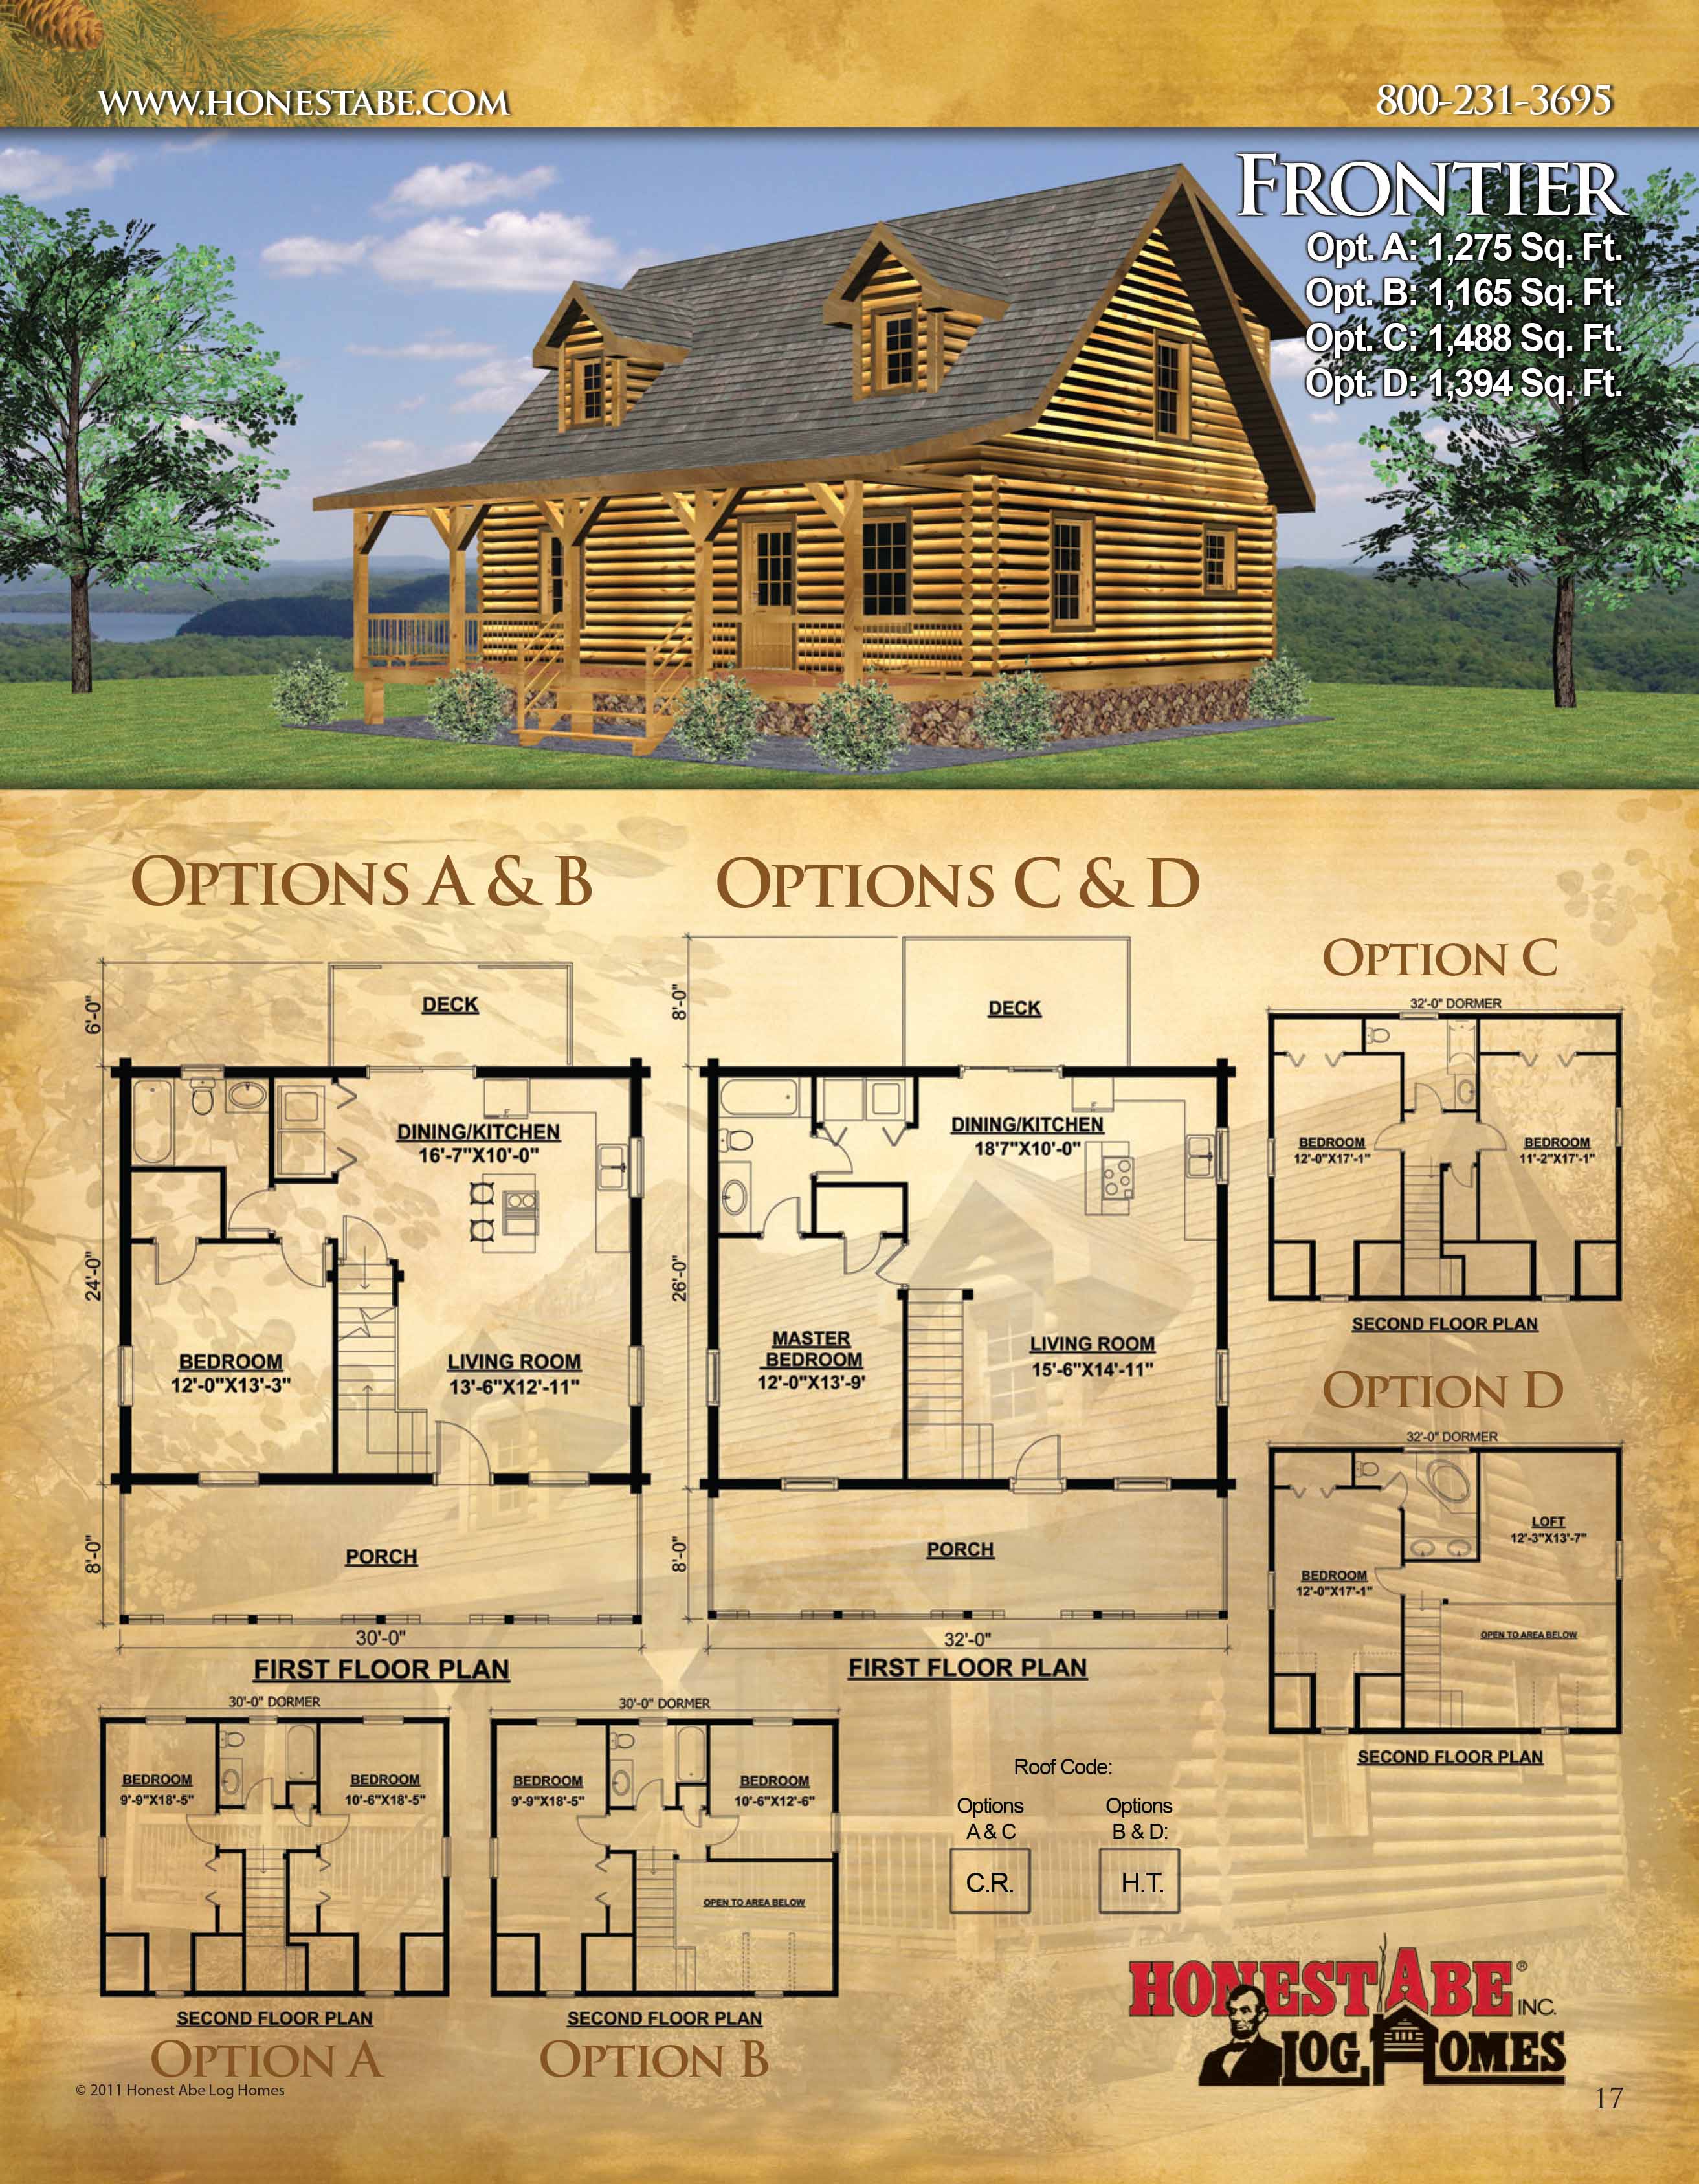 Cabin House Design Plans - Image to u